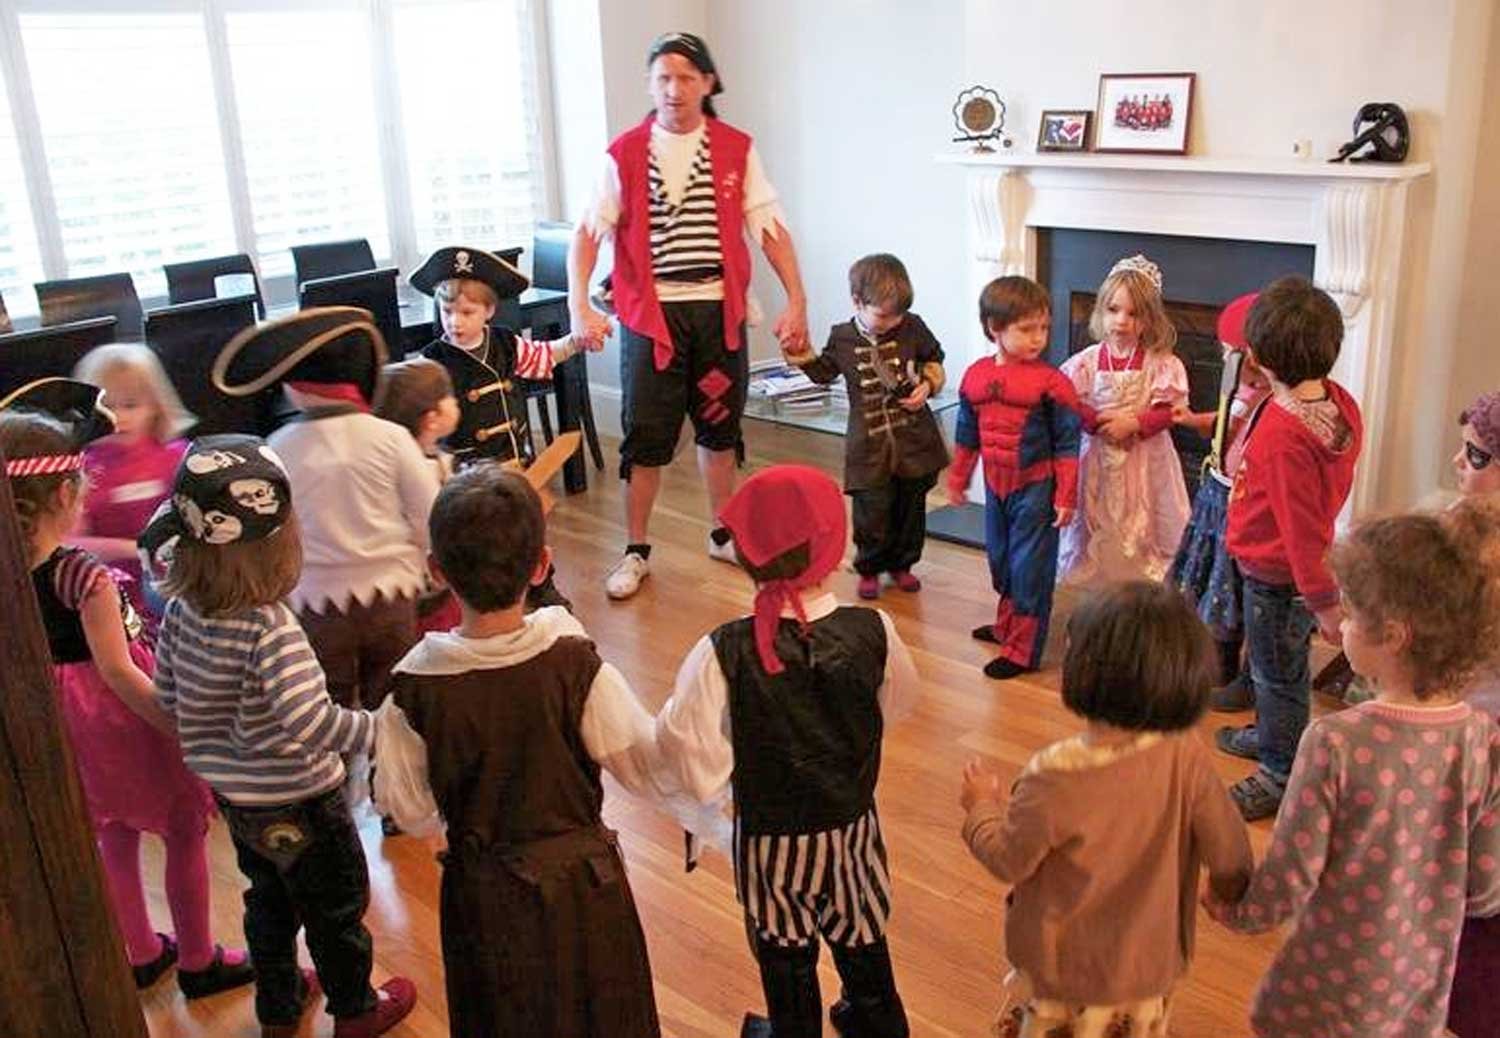 Pirate Dan's Treasure Hunt - Adventure Party Themes - Nutty's Children's Parties 15.jpg